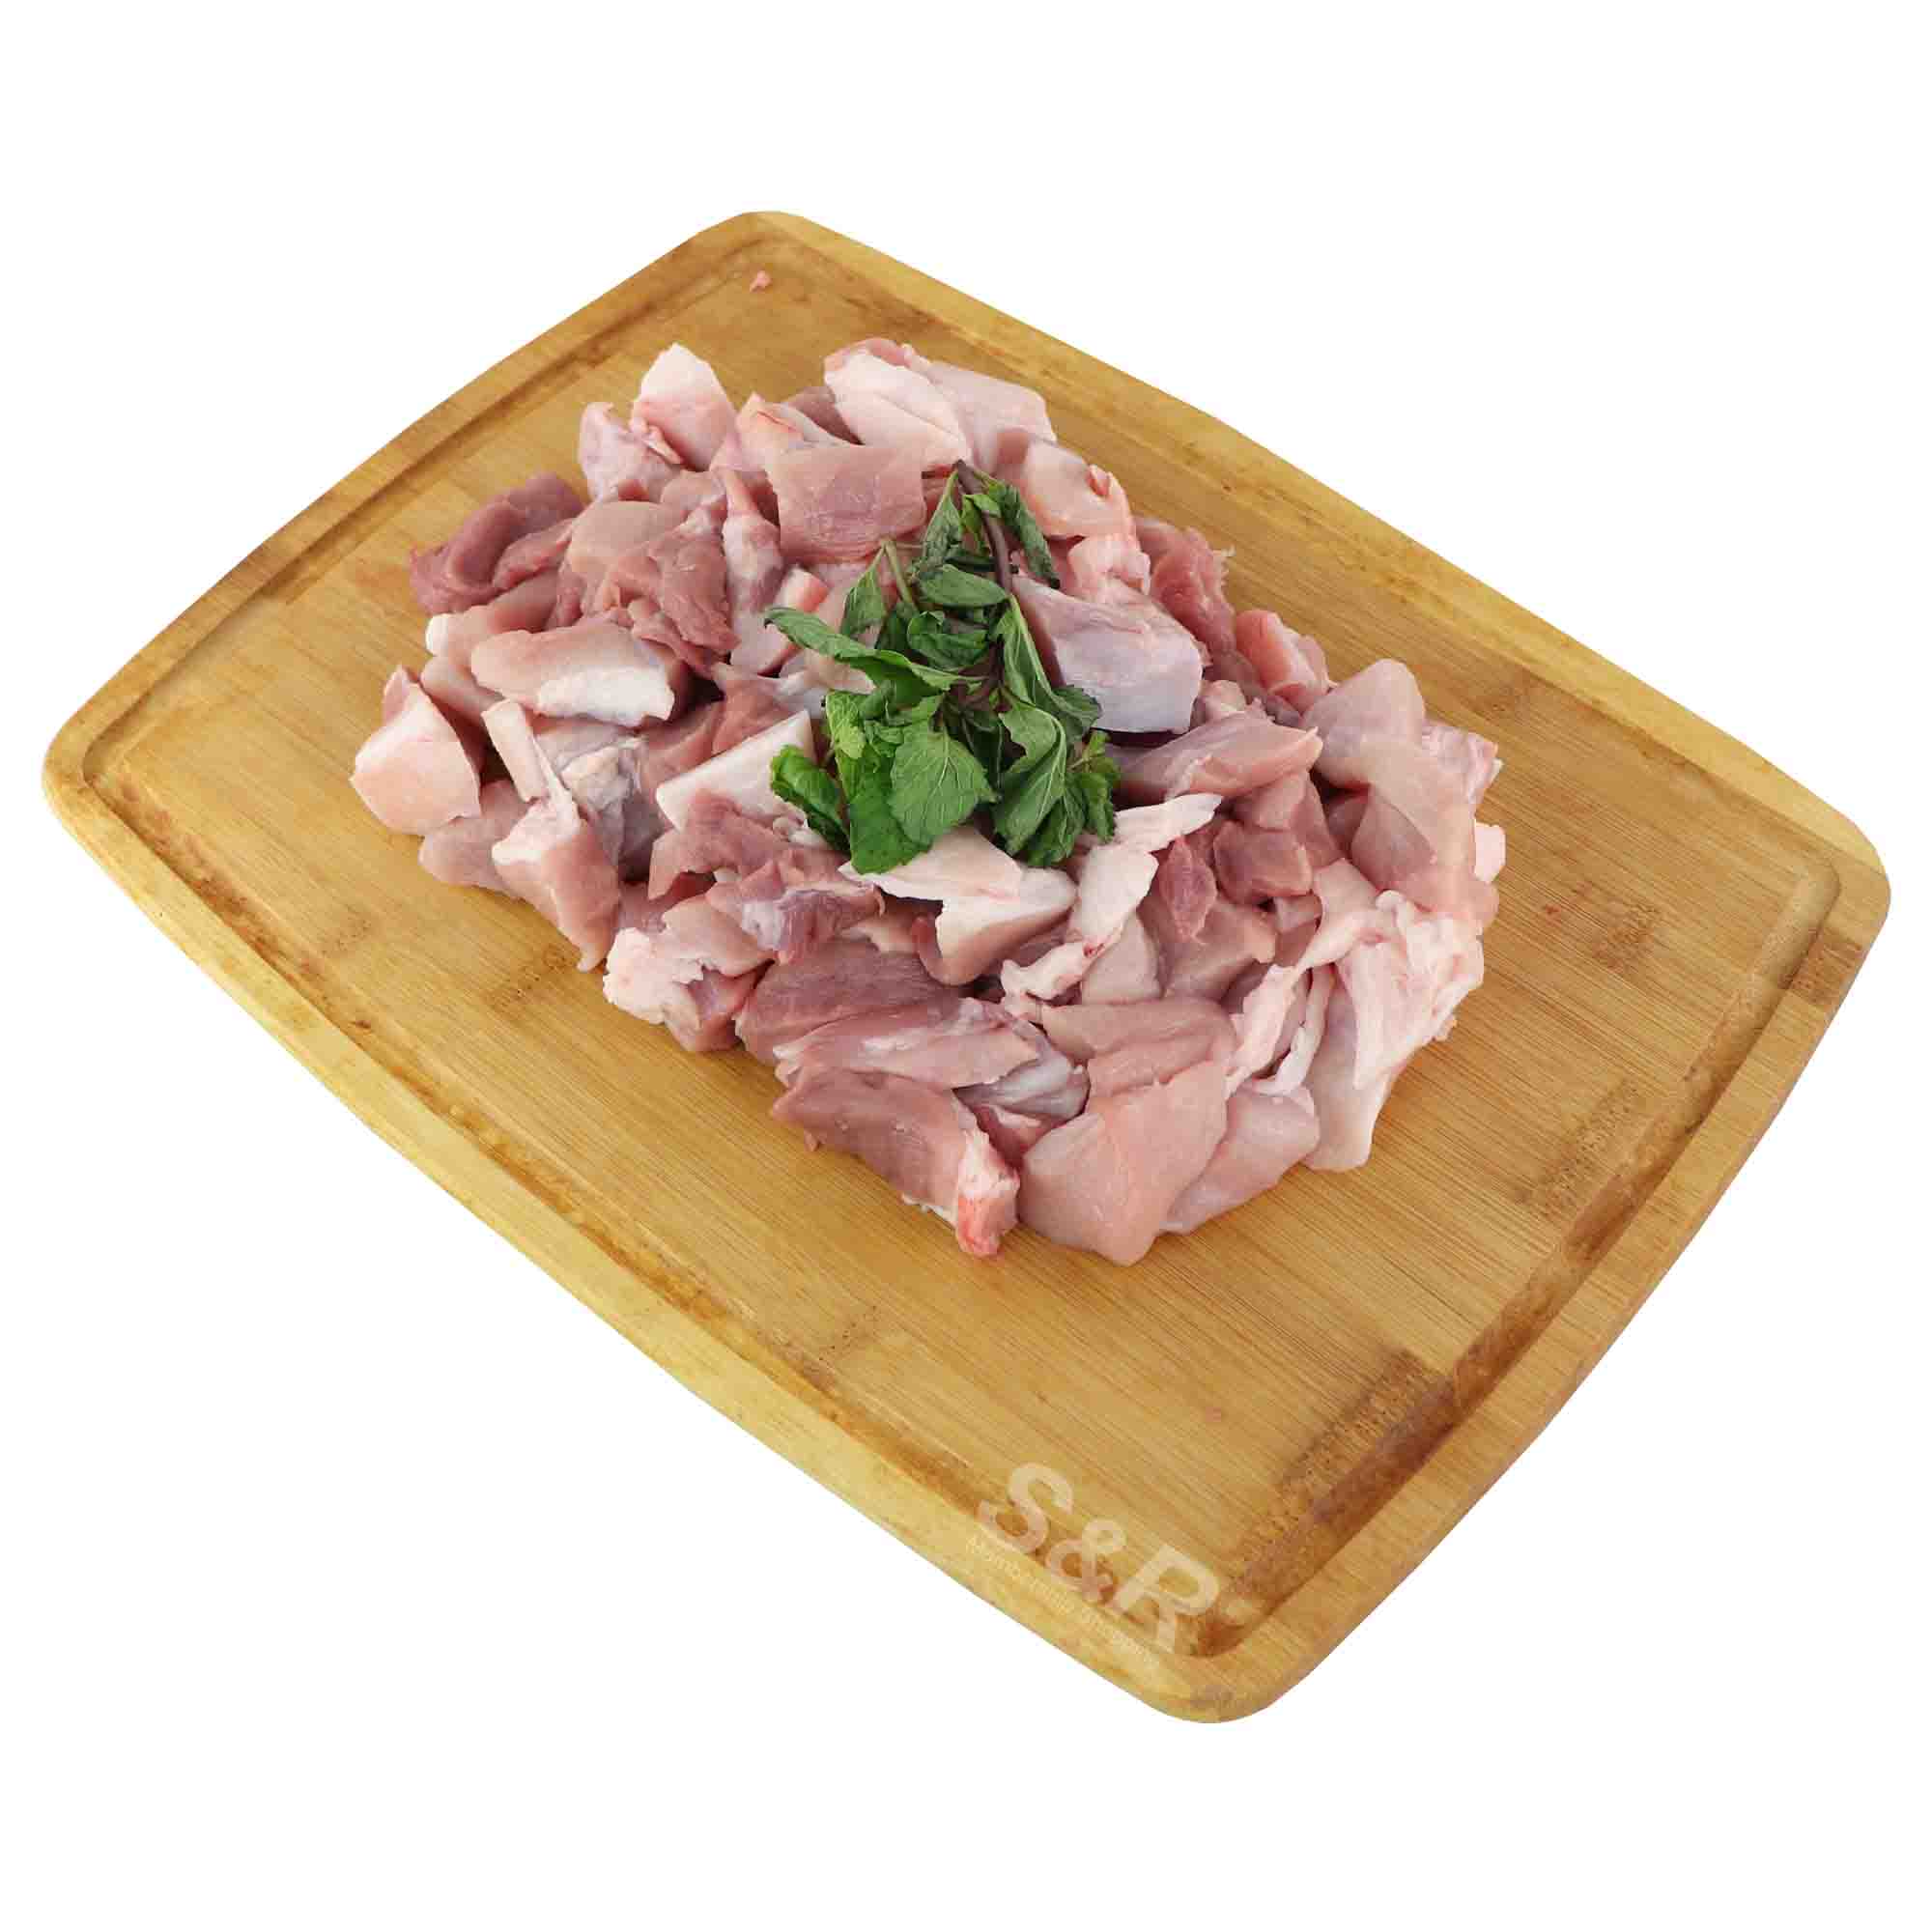 Members' Value Pork Menudo Cut approx. 1.7kg